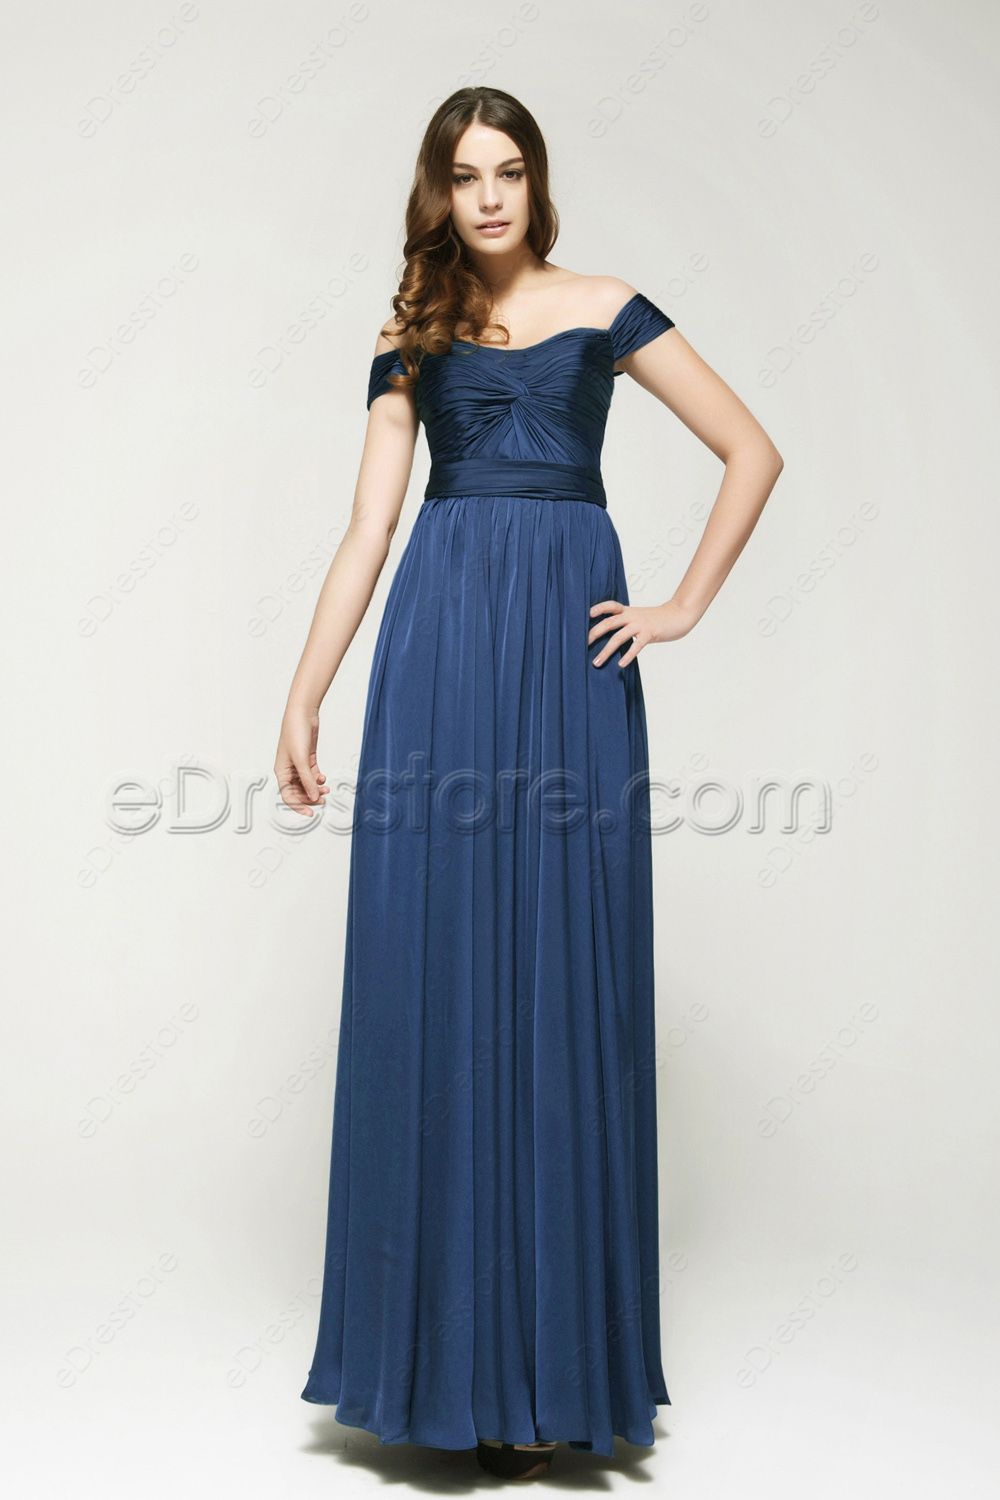 Off the Shoulder Navy Blue Prom Dresses Long | eDresstore